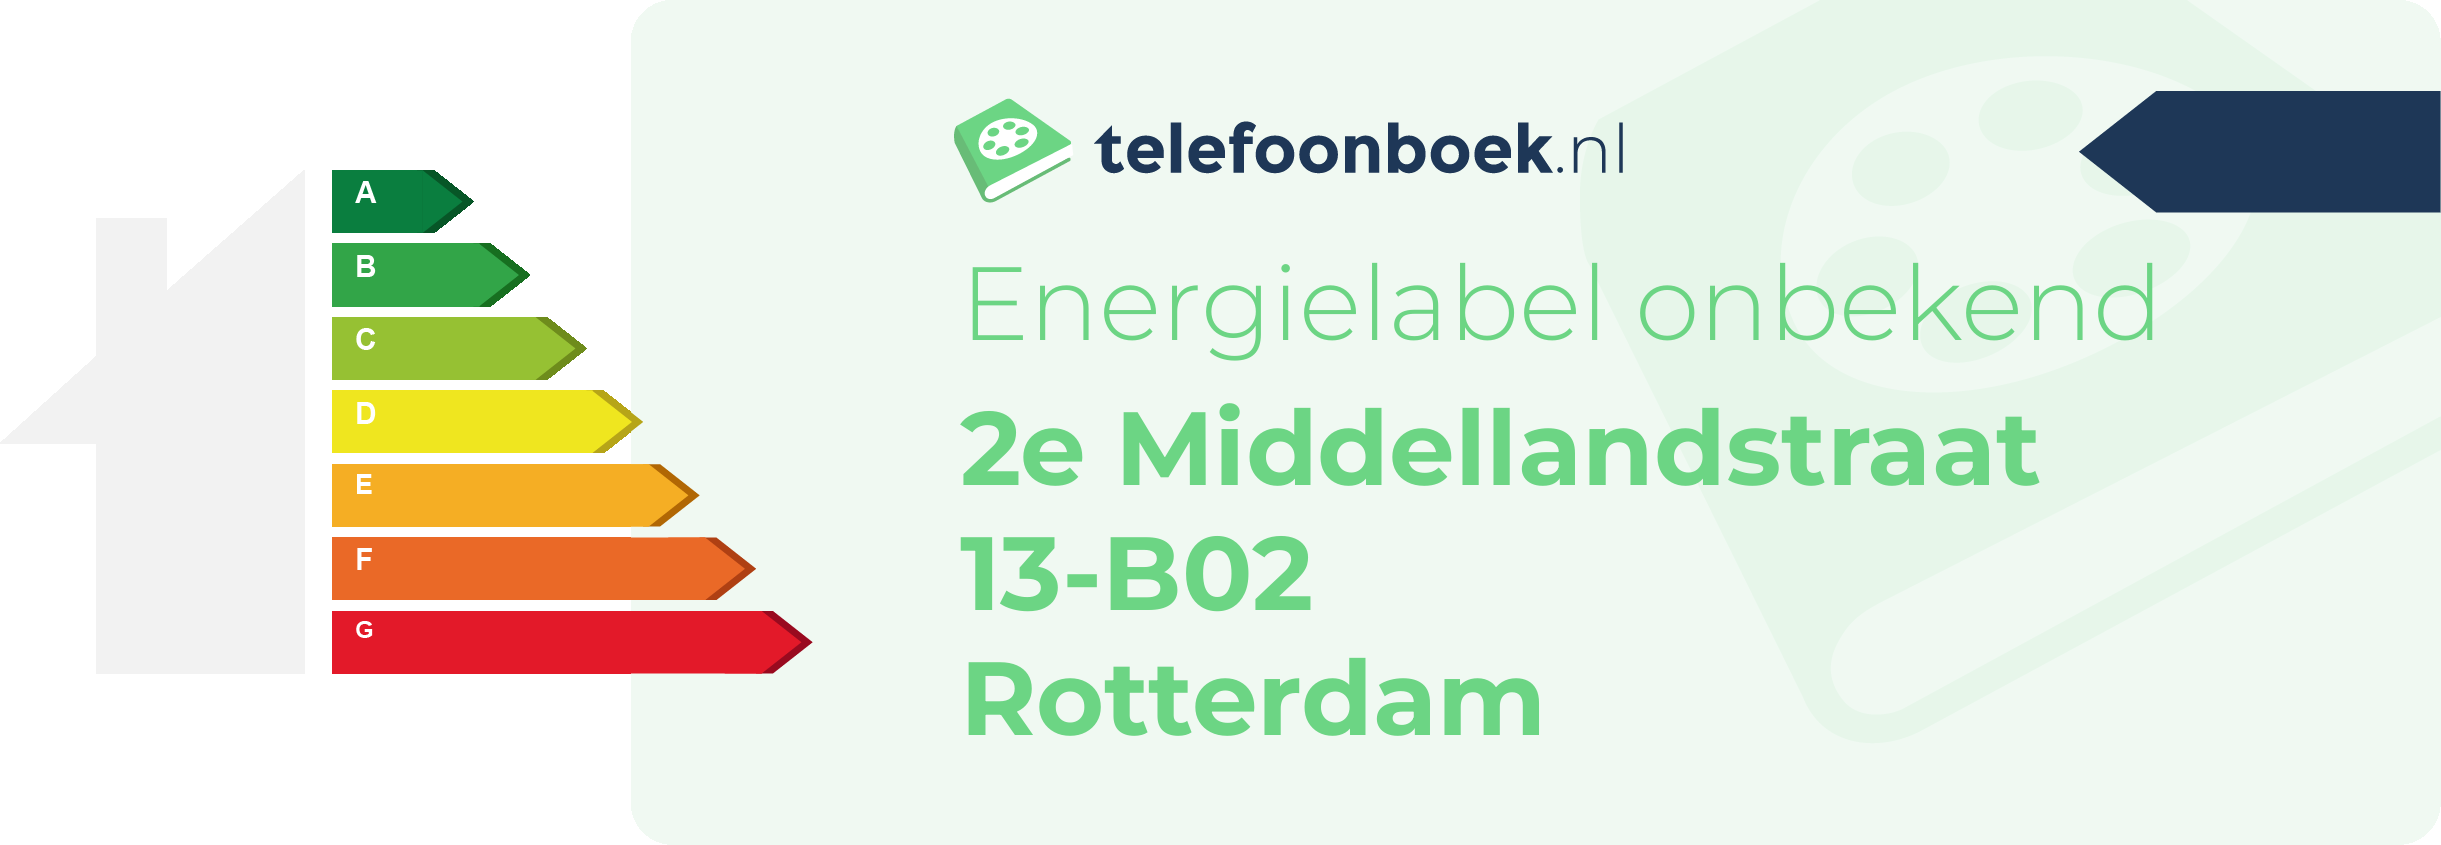 Energielabel 2e Middellandstraat 13-B02 Rotterdam